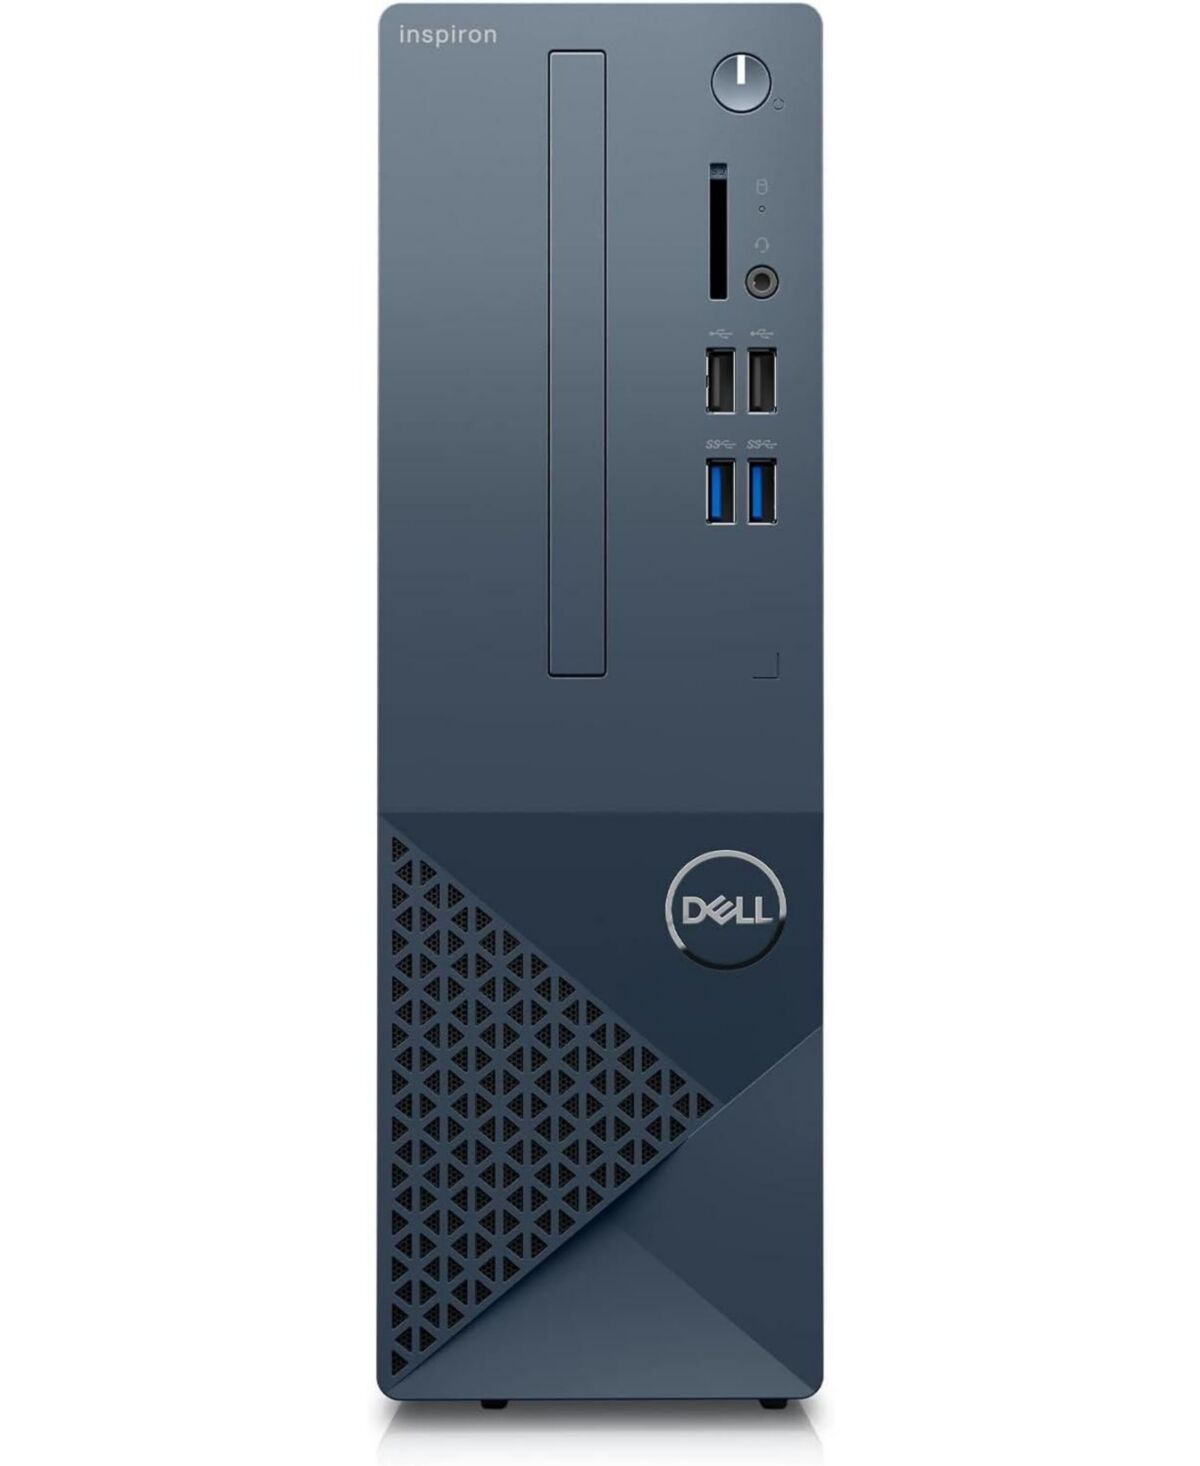 Dell Inspiron 3000 Series 3020 Sff Desktop, Intel Core i5-13400, Intel Uhd Graphics, 8GB DDR4 Ram, 512GB PCIe M.2 Ssd, Wi-Fi 5, Windows 11 Pro, Blue -